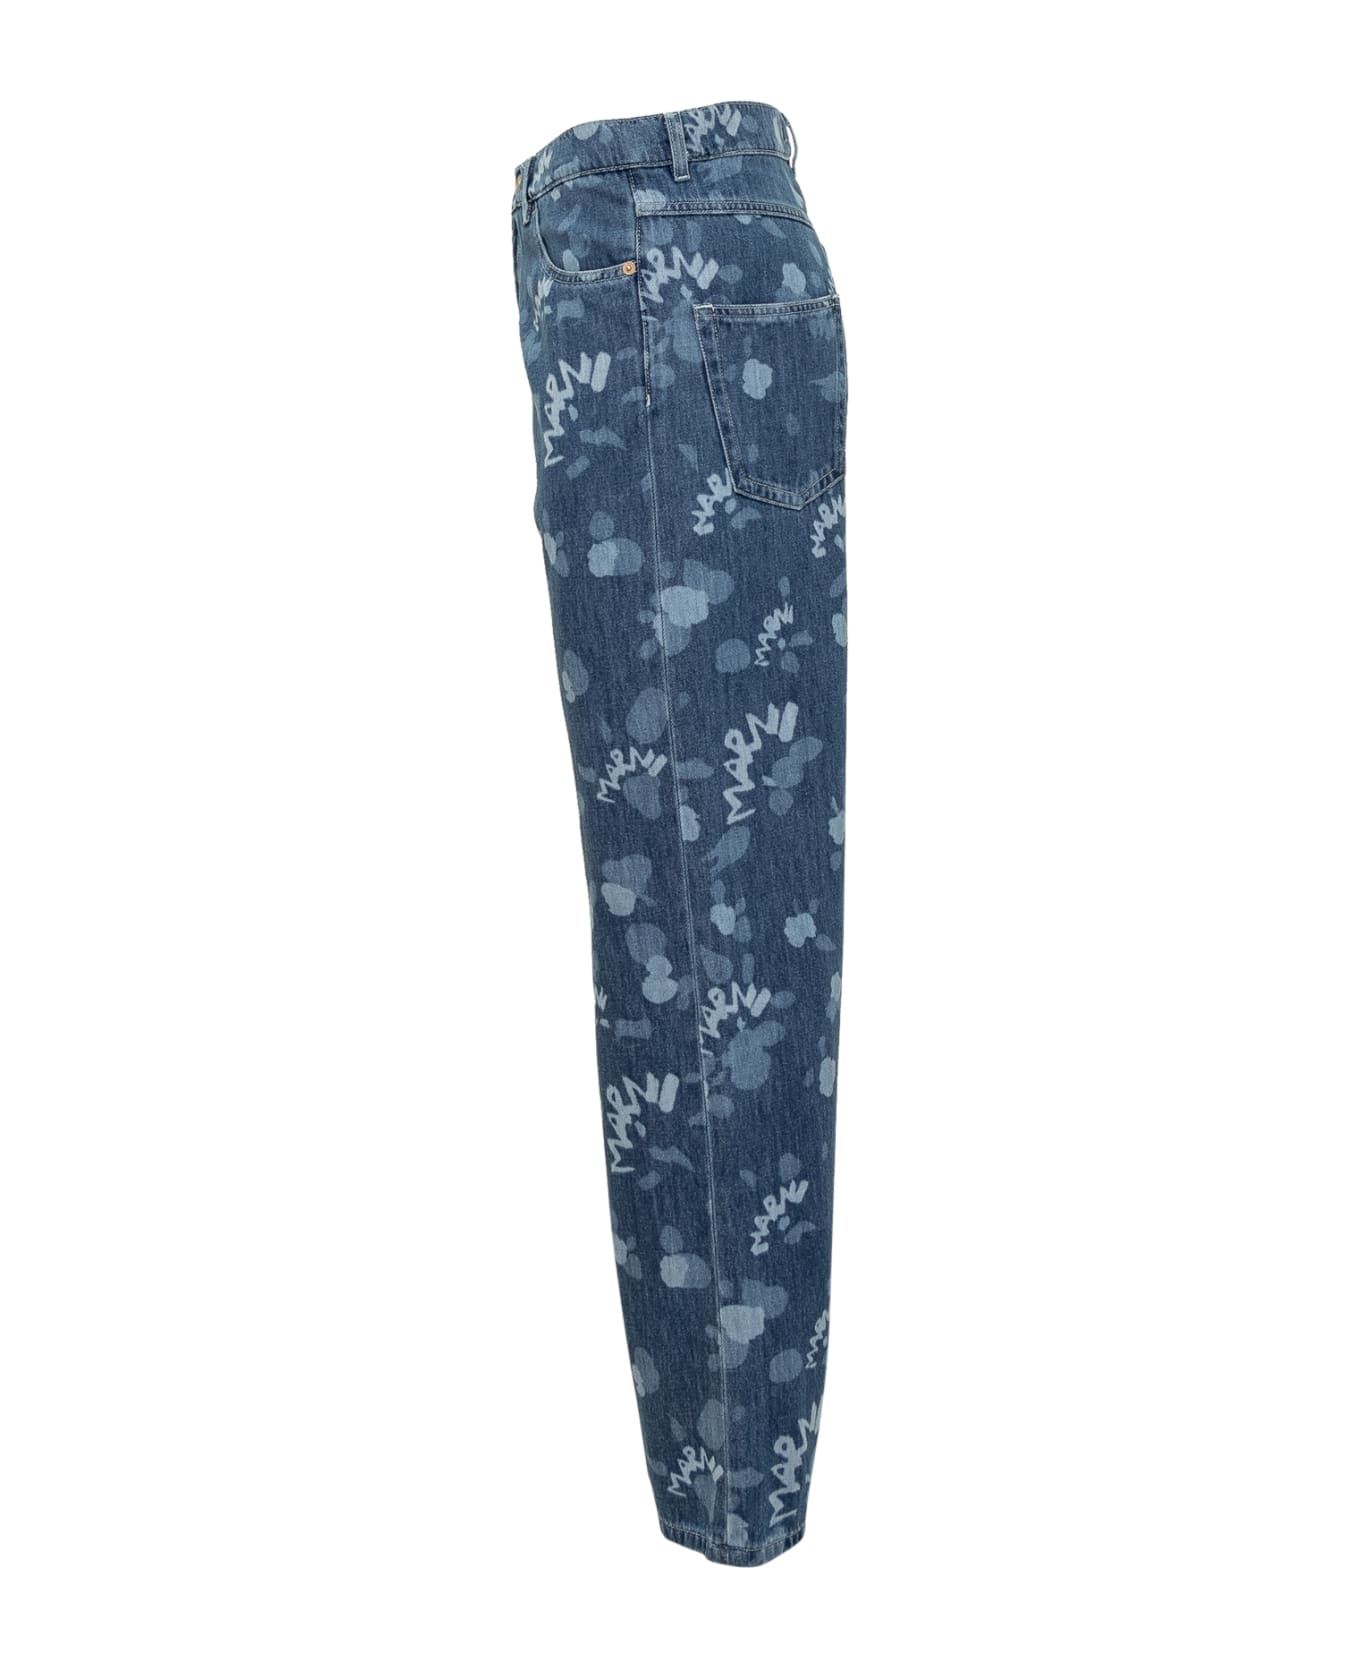 Marni Jeans With Marni Dripping Print - IRIS BLUE